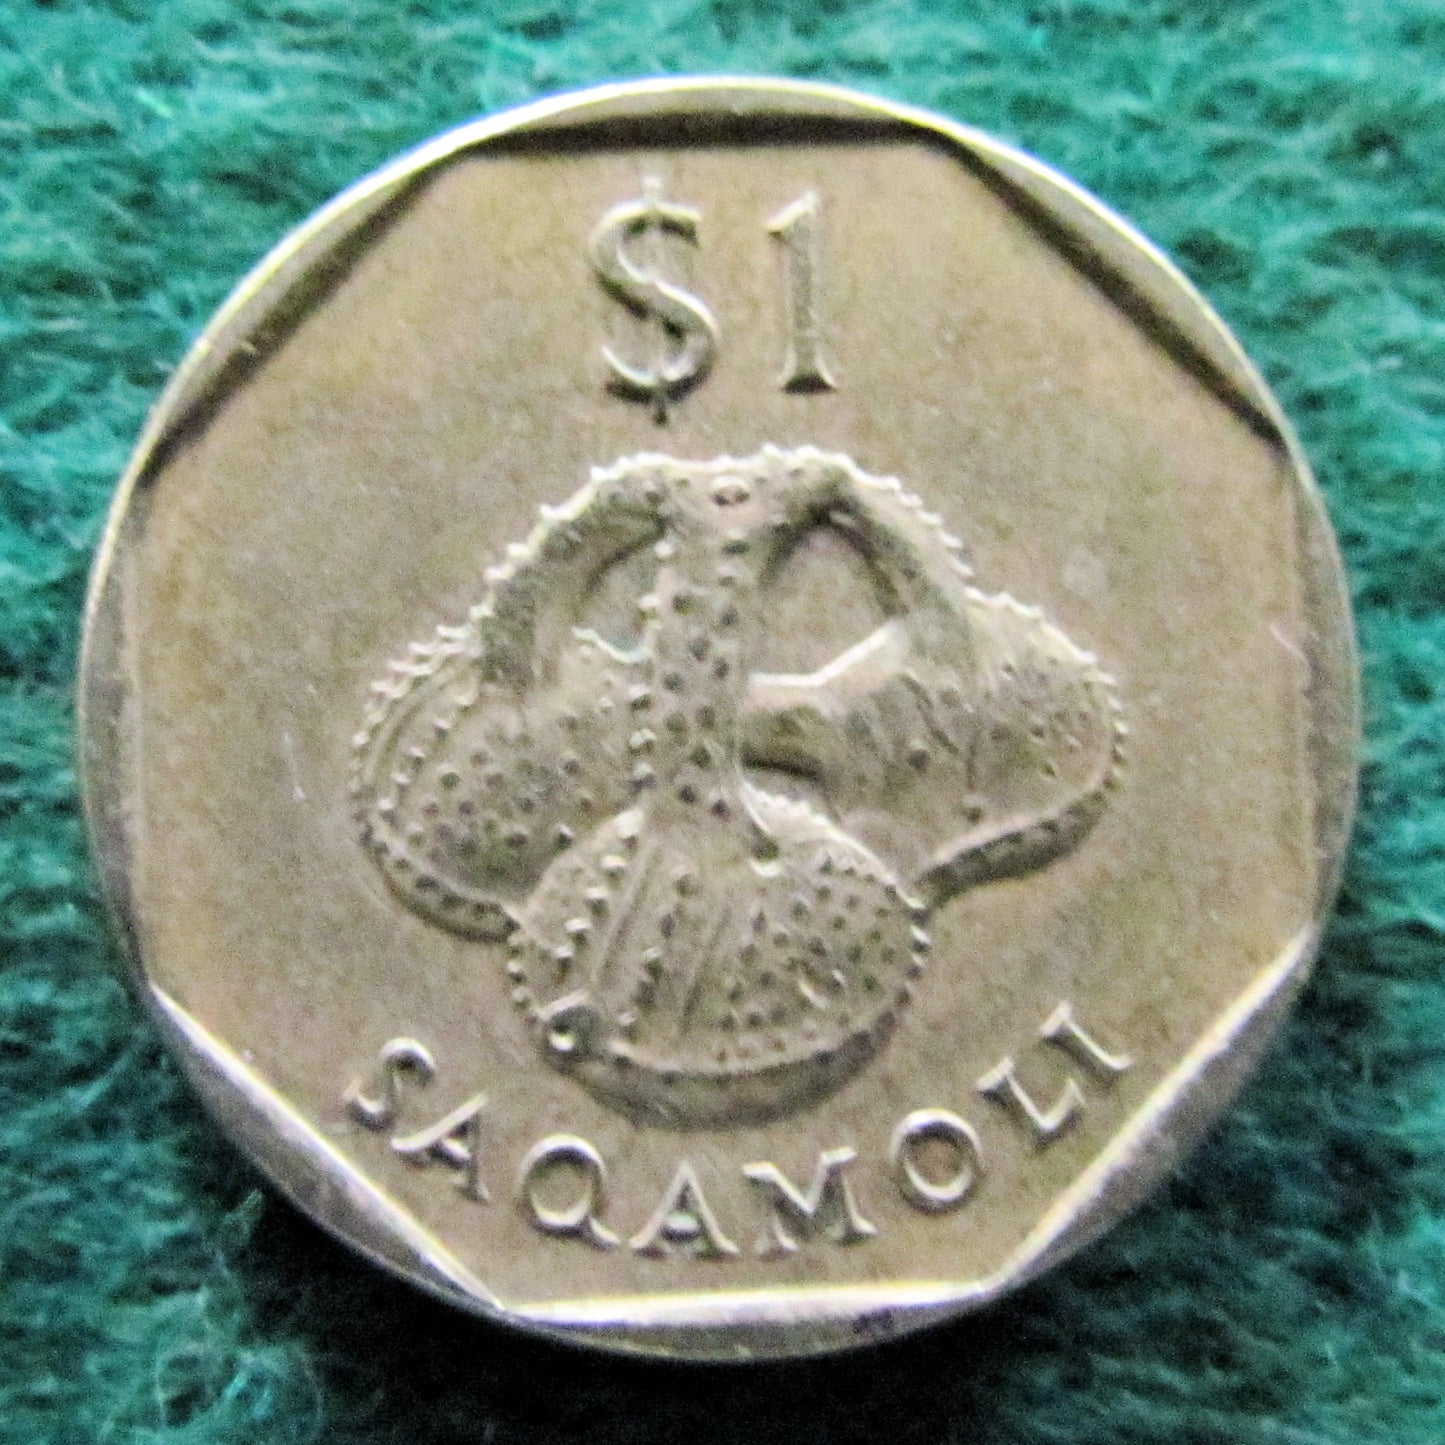 Fiji 1995 1 One Dollar Queen Elizabeth Coin - Circulated